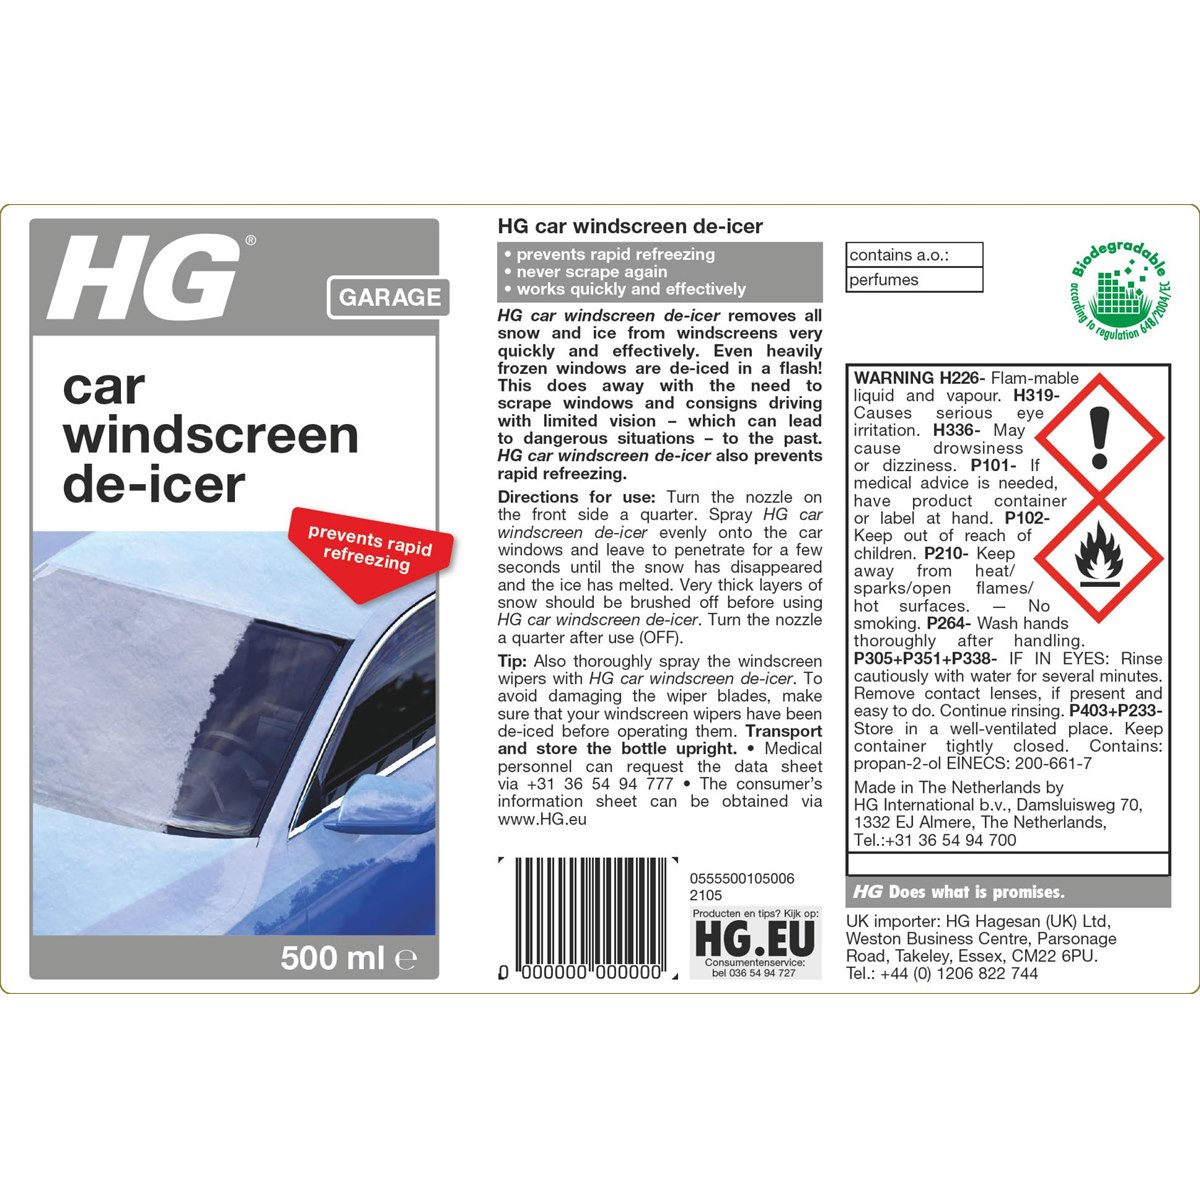 HG Car Windscreen De-Icer Usage Instructions